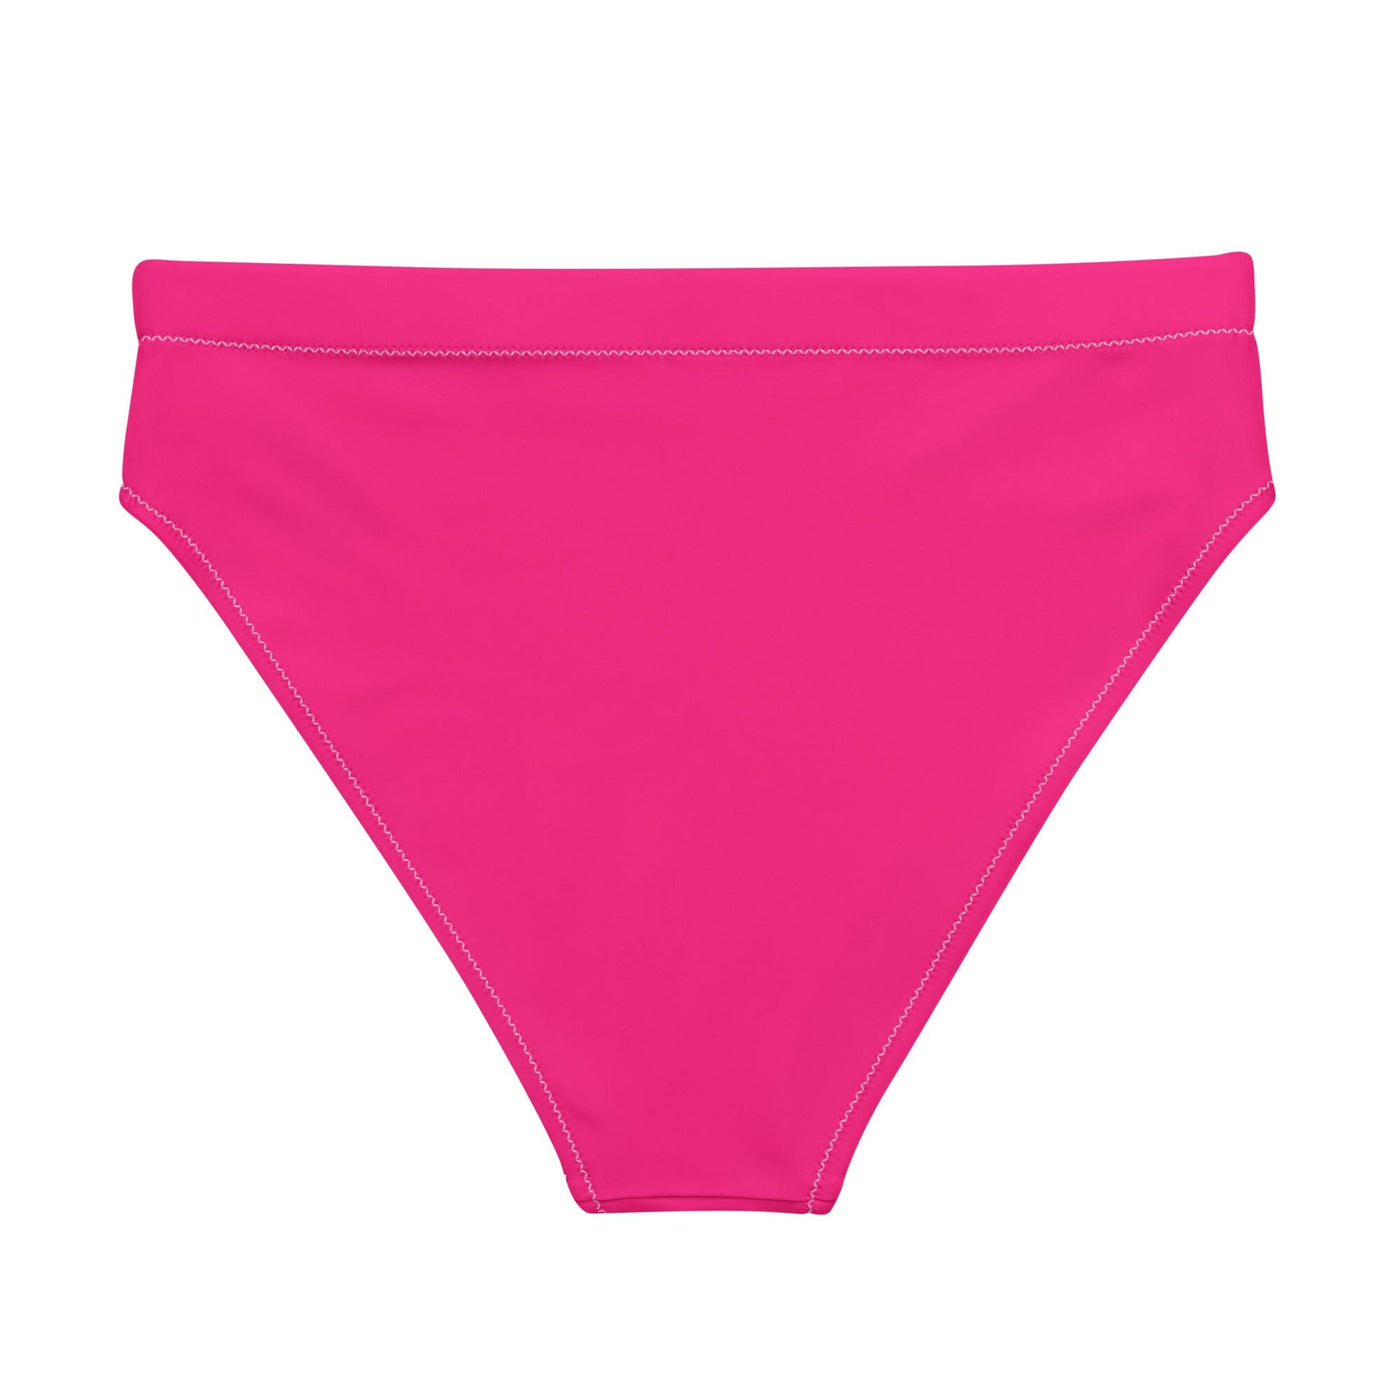 Neon Pink Solid Bikini Bottom - Coastal Cool - Swimwear and Beachwear - Recycled fabrics